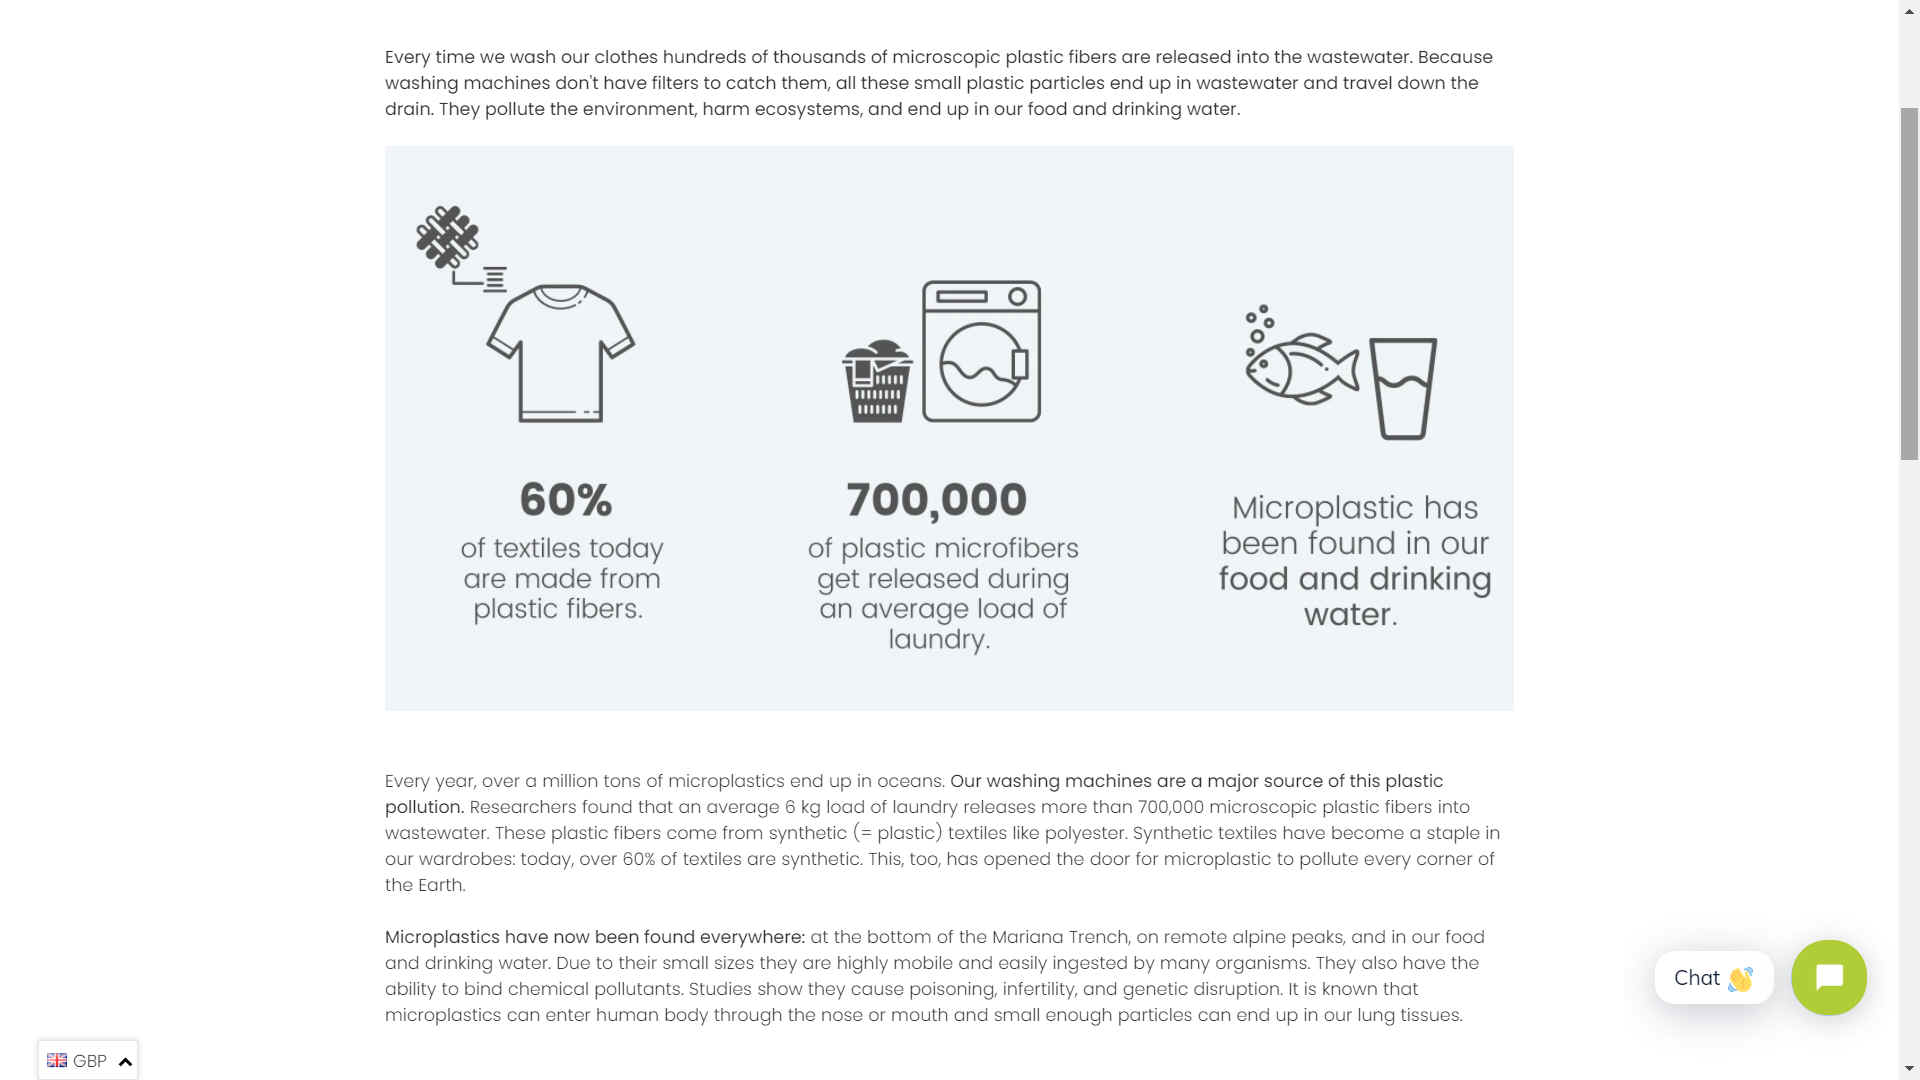 700,000 plastic microfibers per washing machine load